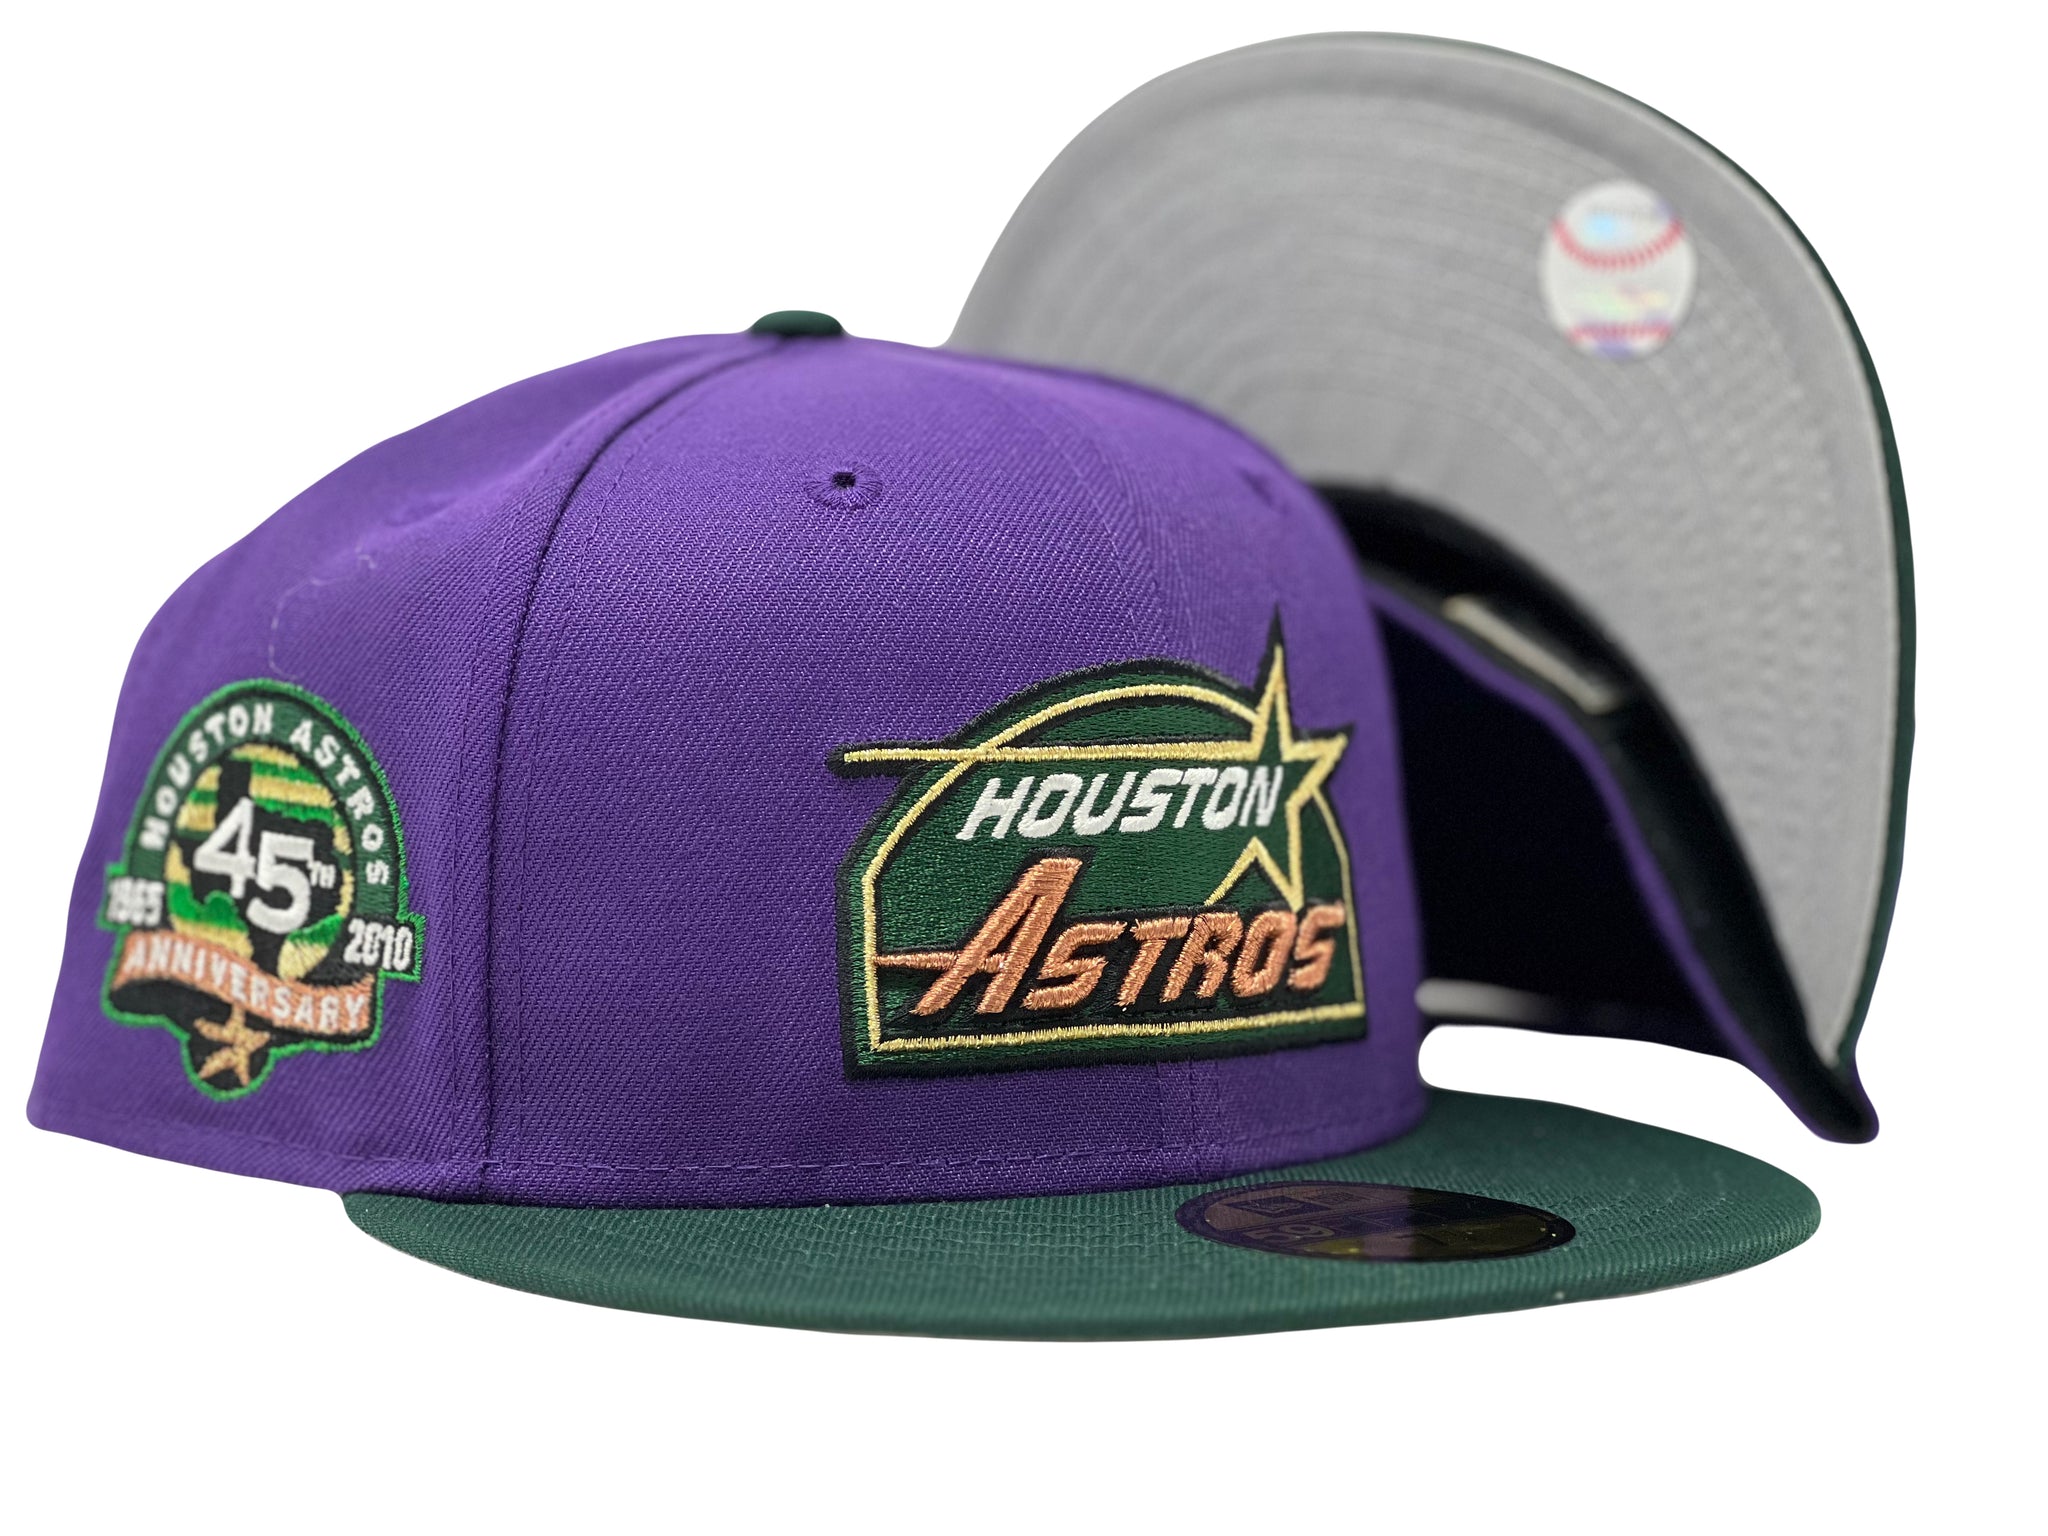 Houston Astros 45th Anniversary Purple/ Green New Era Fitted Hat – Sports  World 165